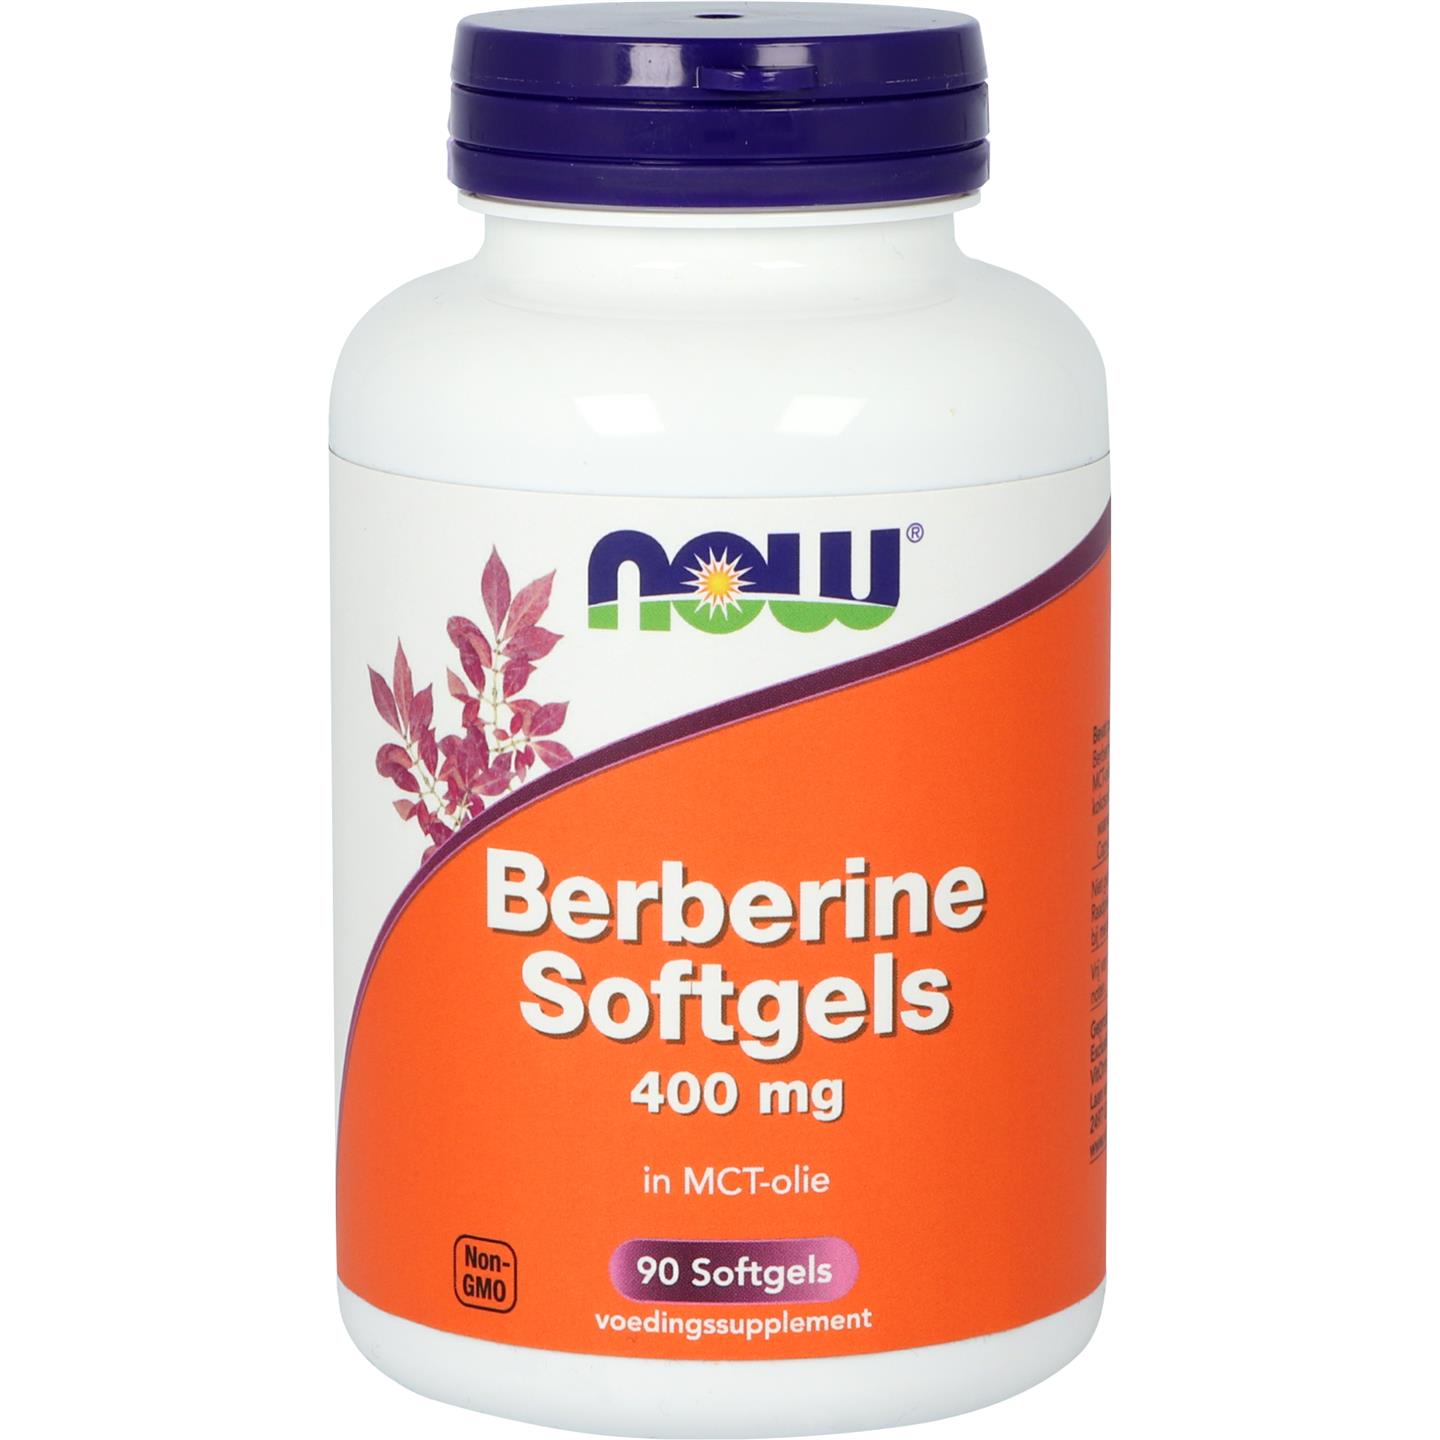 Berberine Softgels 400 mg